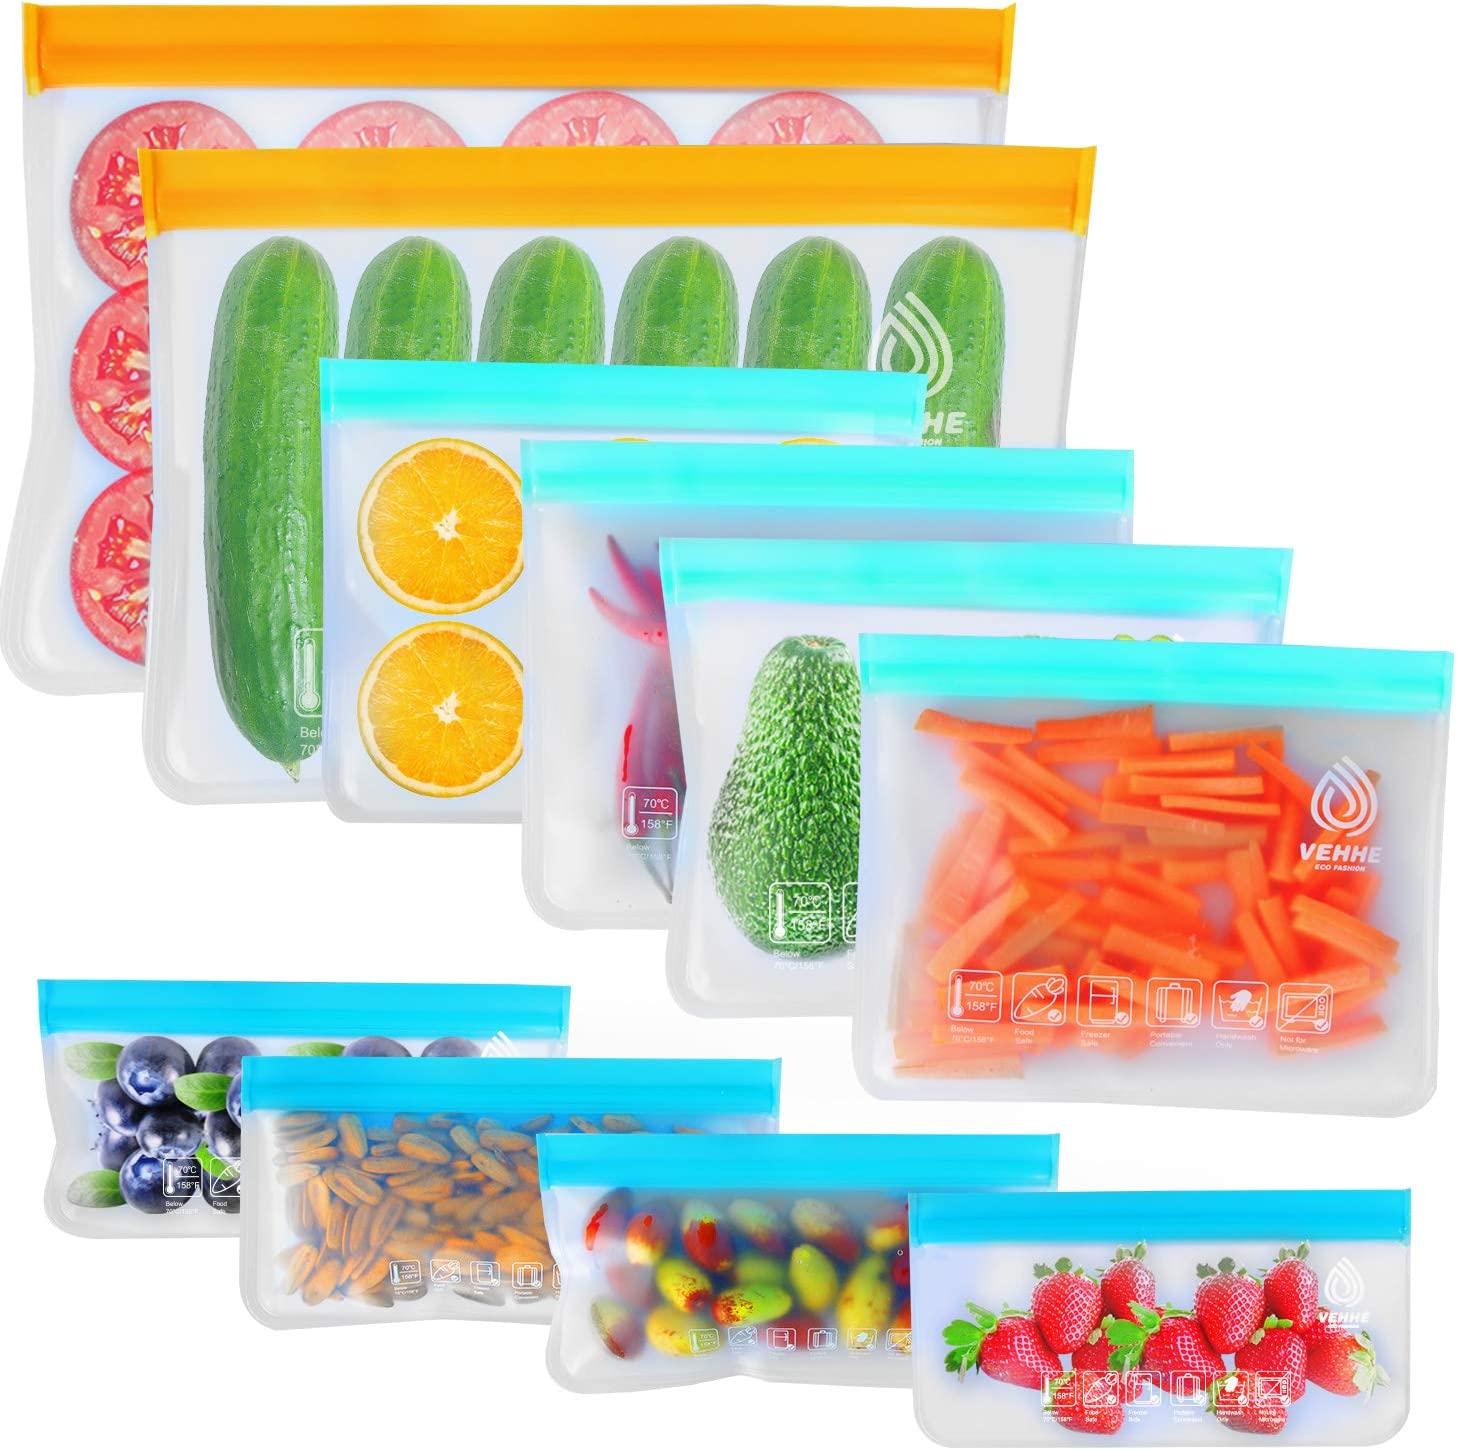 Qinline reusable food storage bags - 10 pack bpa free flat freezer